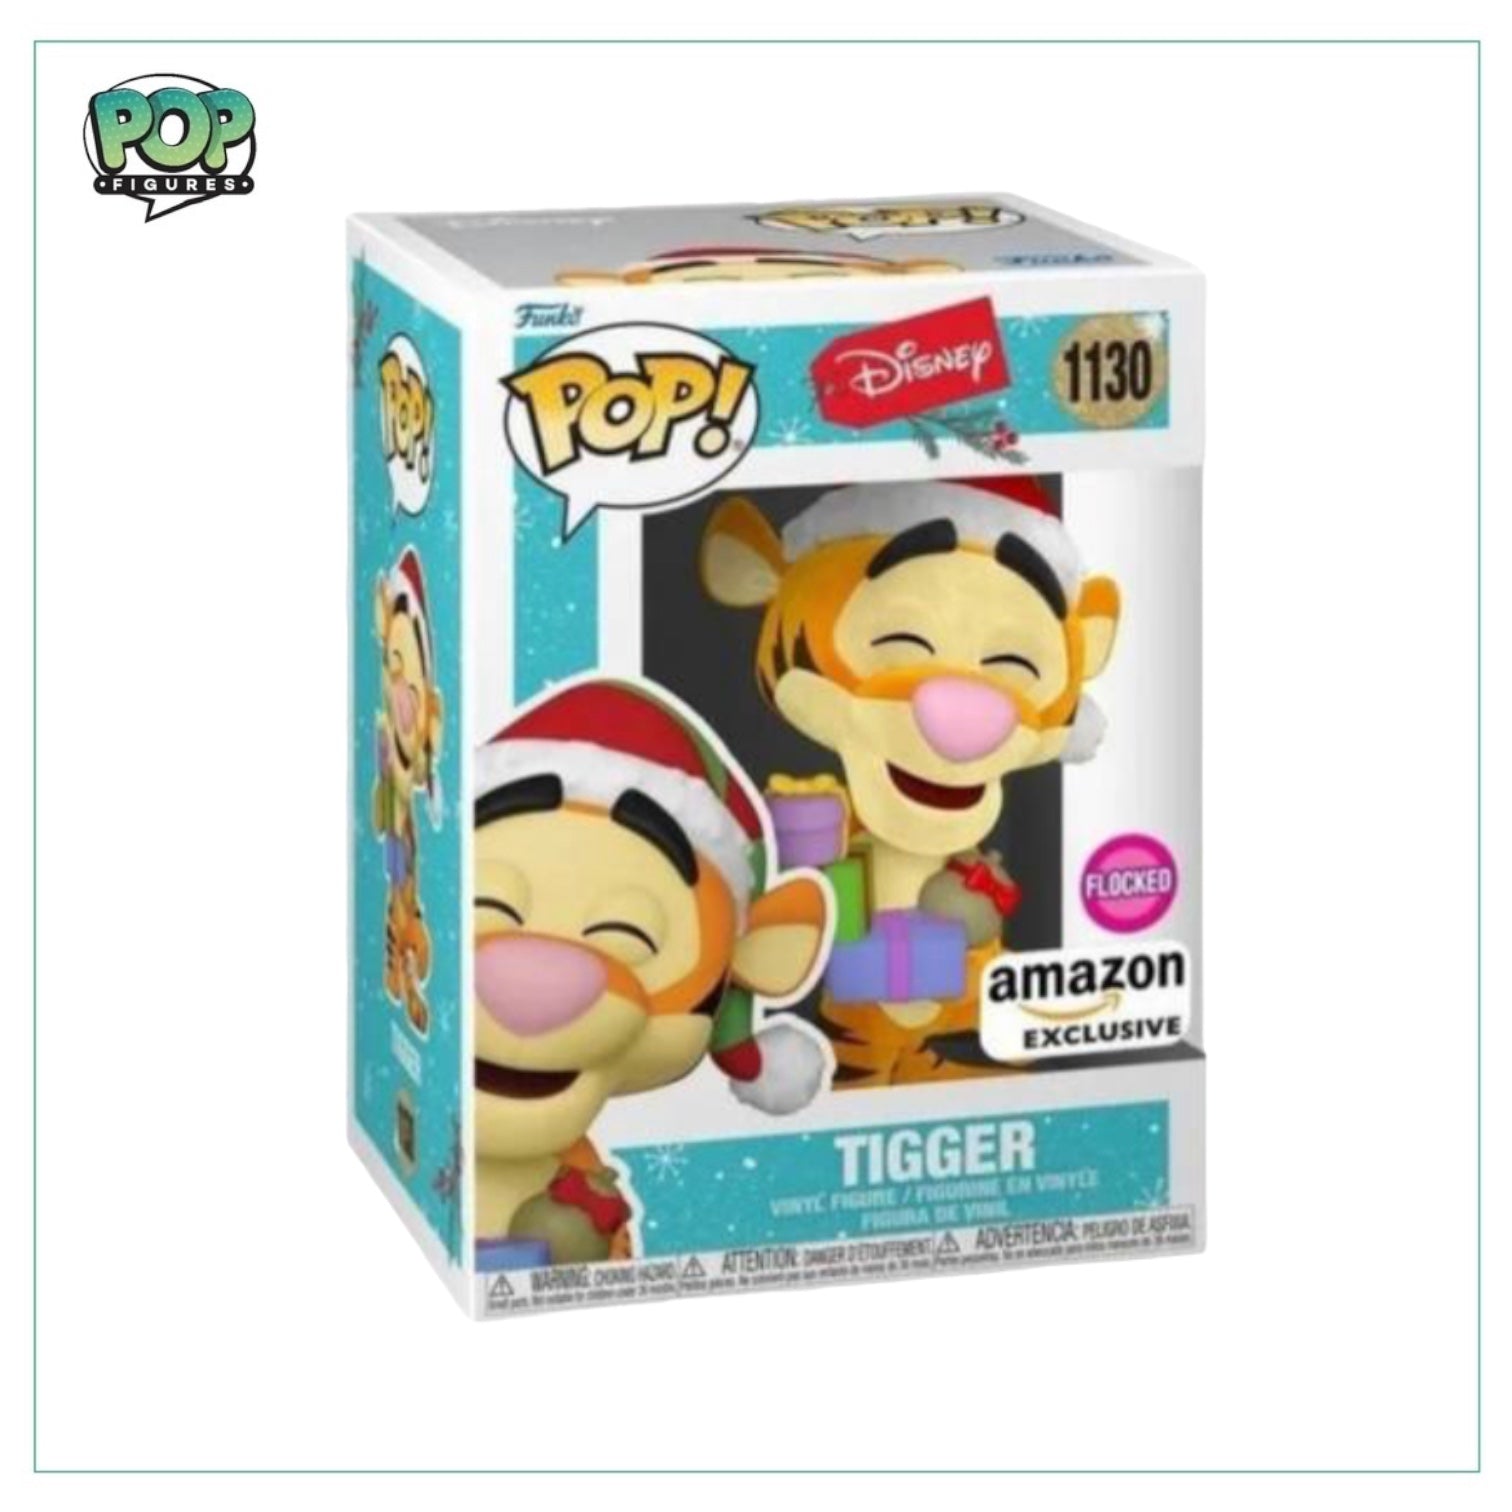 Tigger (Flocked) #1130 Funko Pop! Disney - Amazon Exclusive